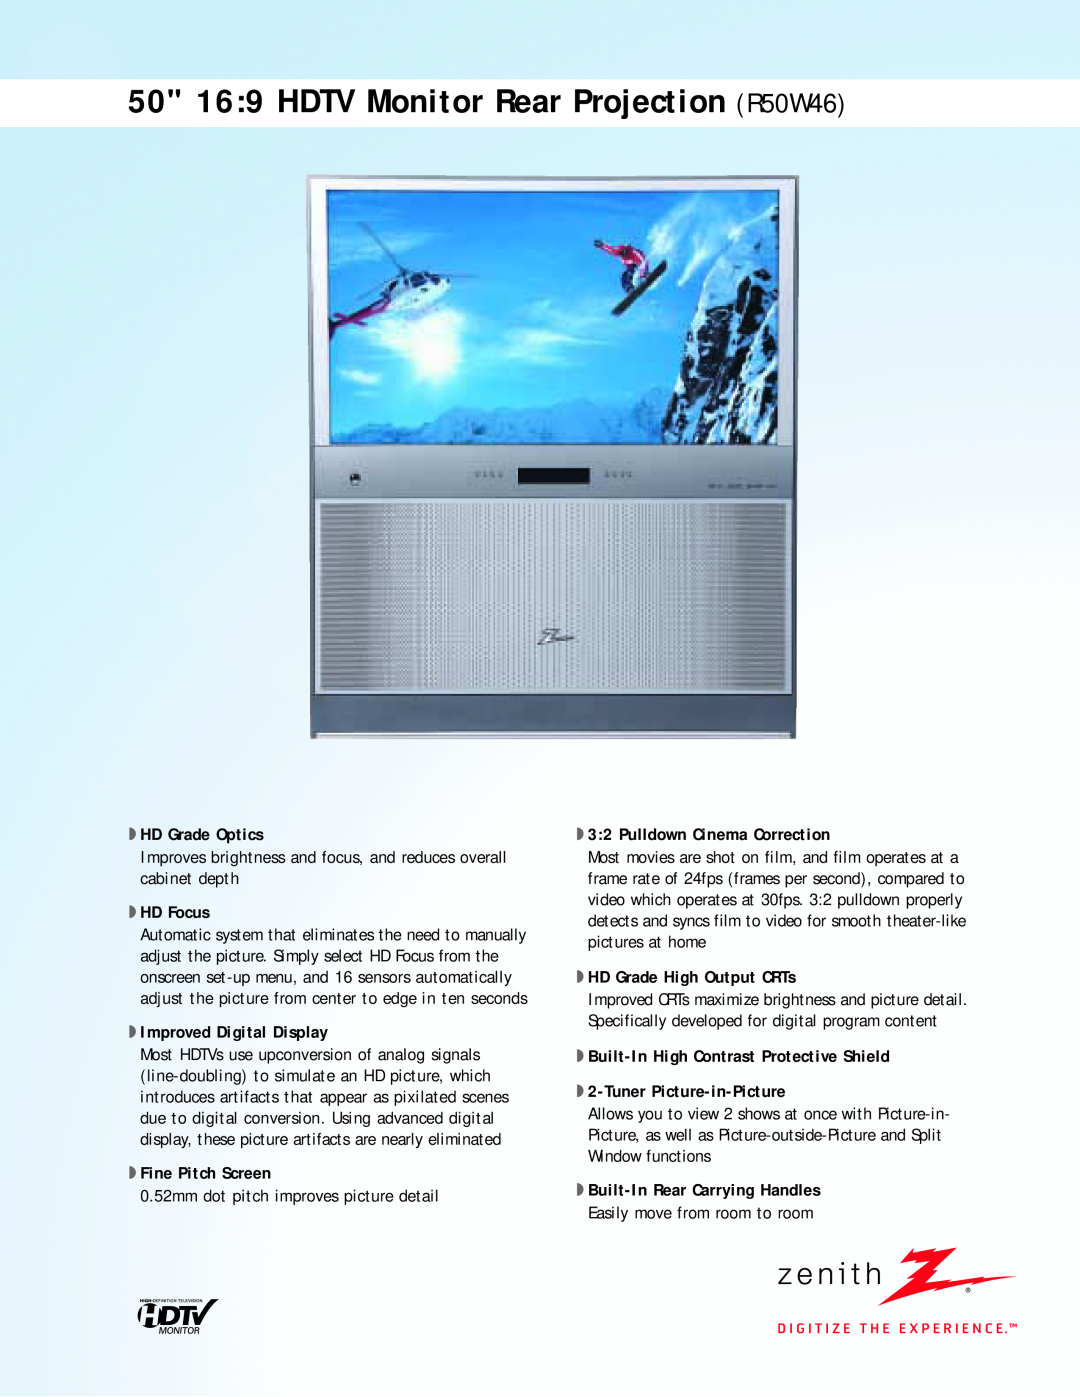 LG Electronics manual 50 169 HDTV Monitor Rear Projection R50W46, HD Grade Optics, HD Focus, Improved Digital Display 